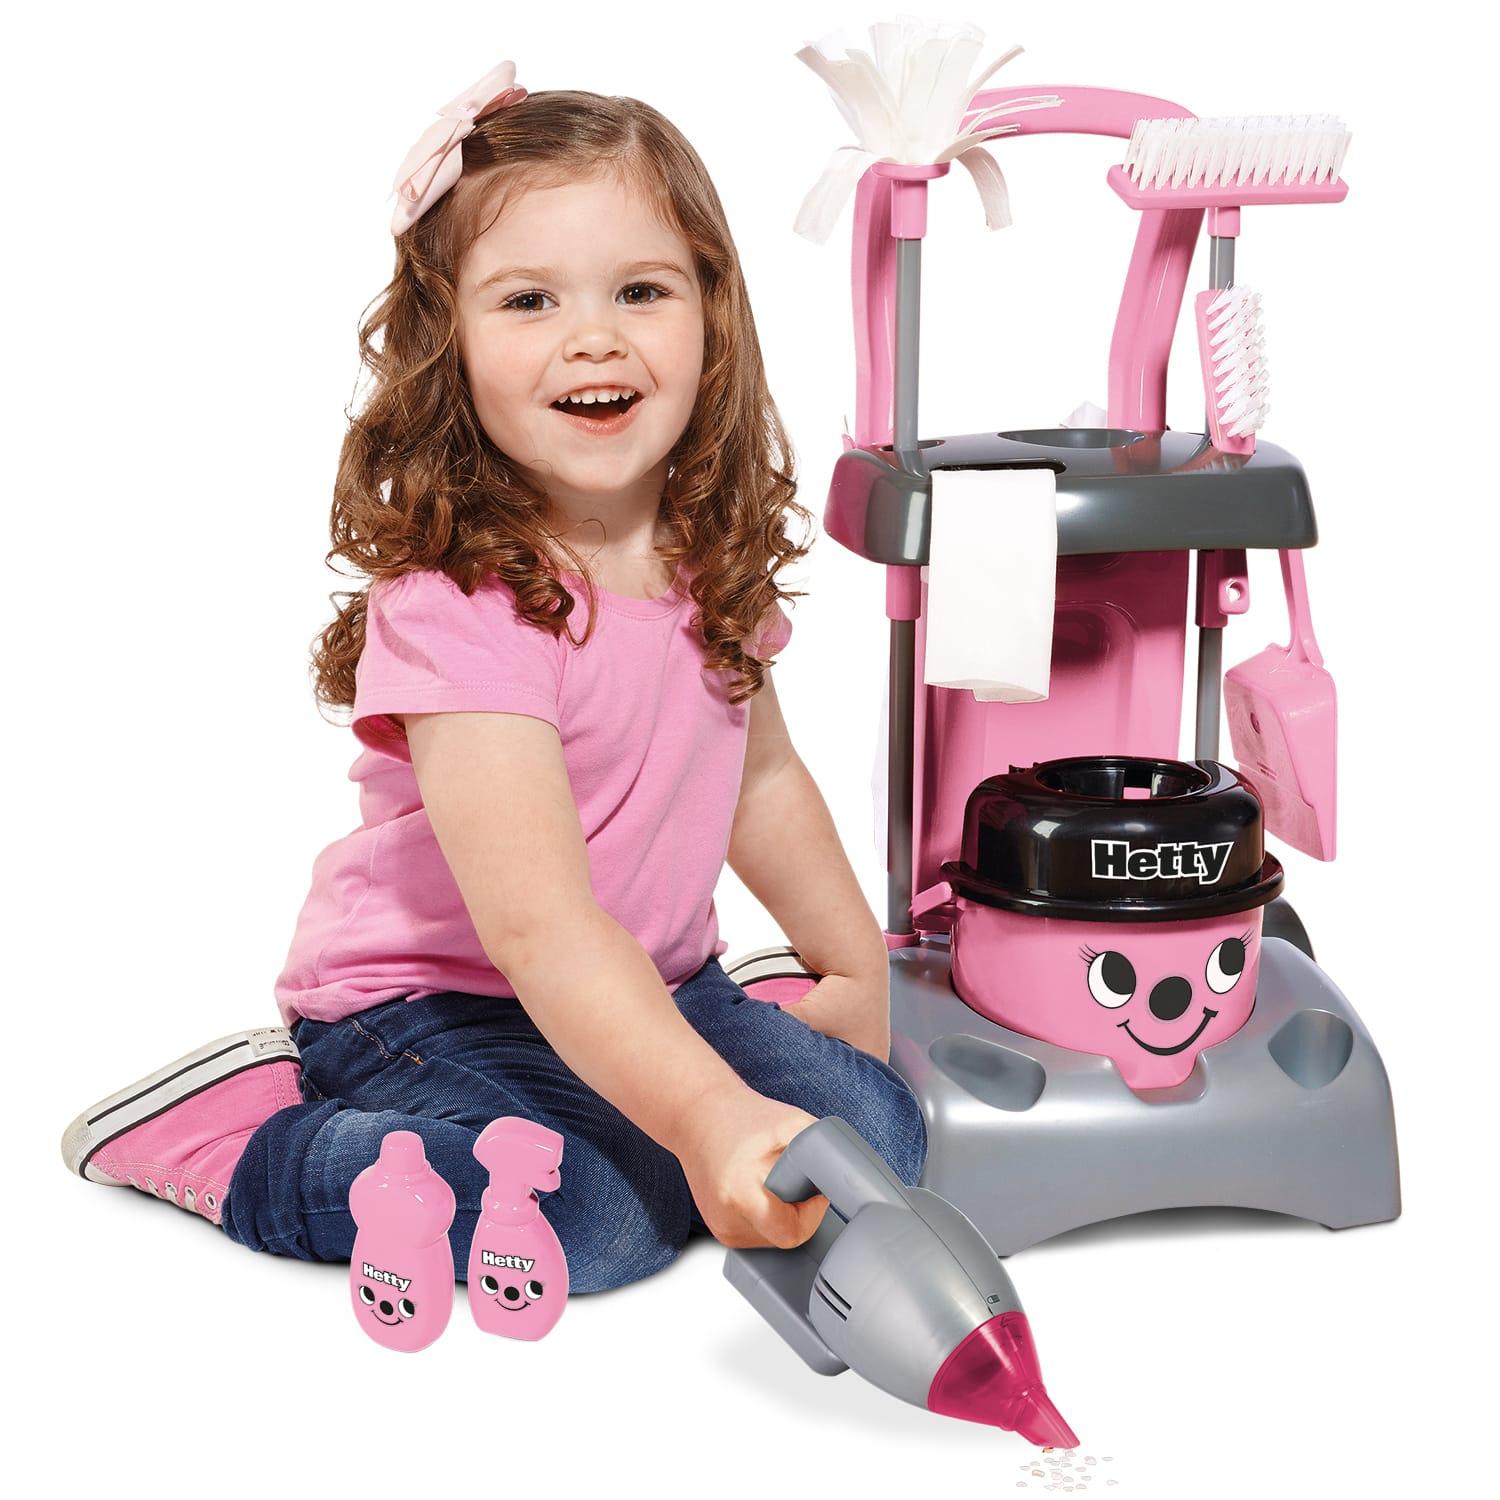 Casdon Little Cook Deluxe Hetty Cleaning Trolley Pink/Black 